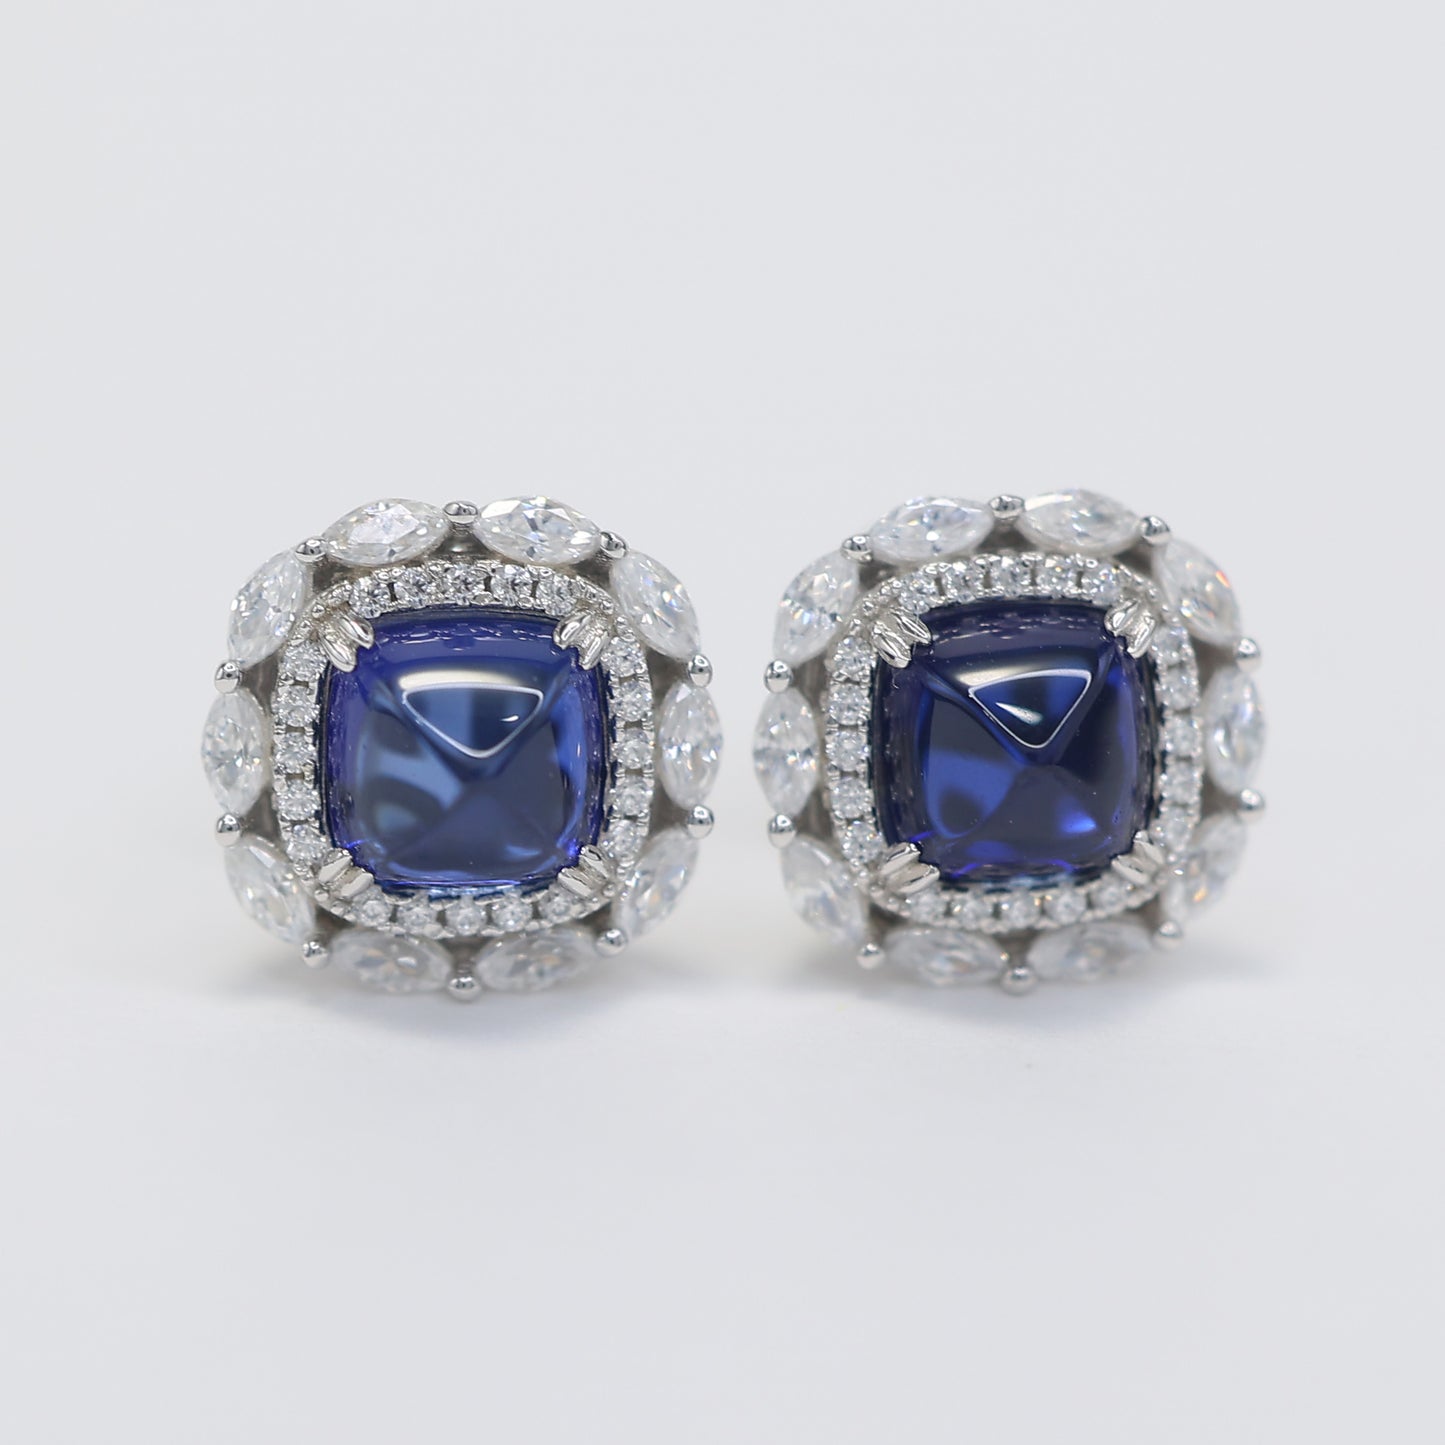 Micro-setting Sapphire color horse eye shape sugar tower earrings, sterling silver